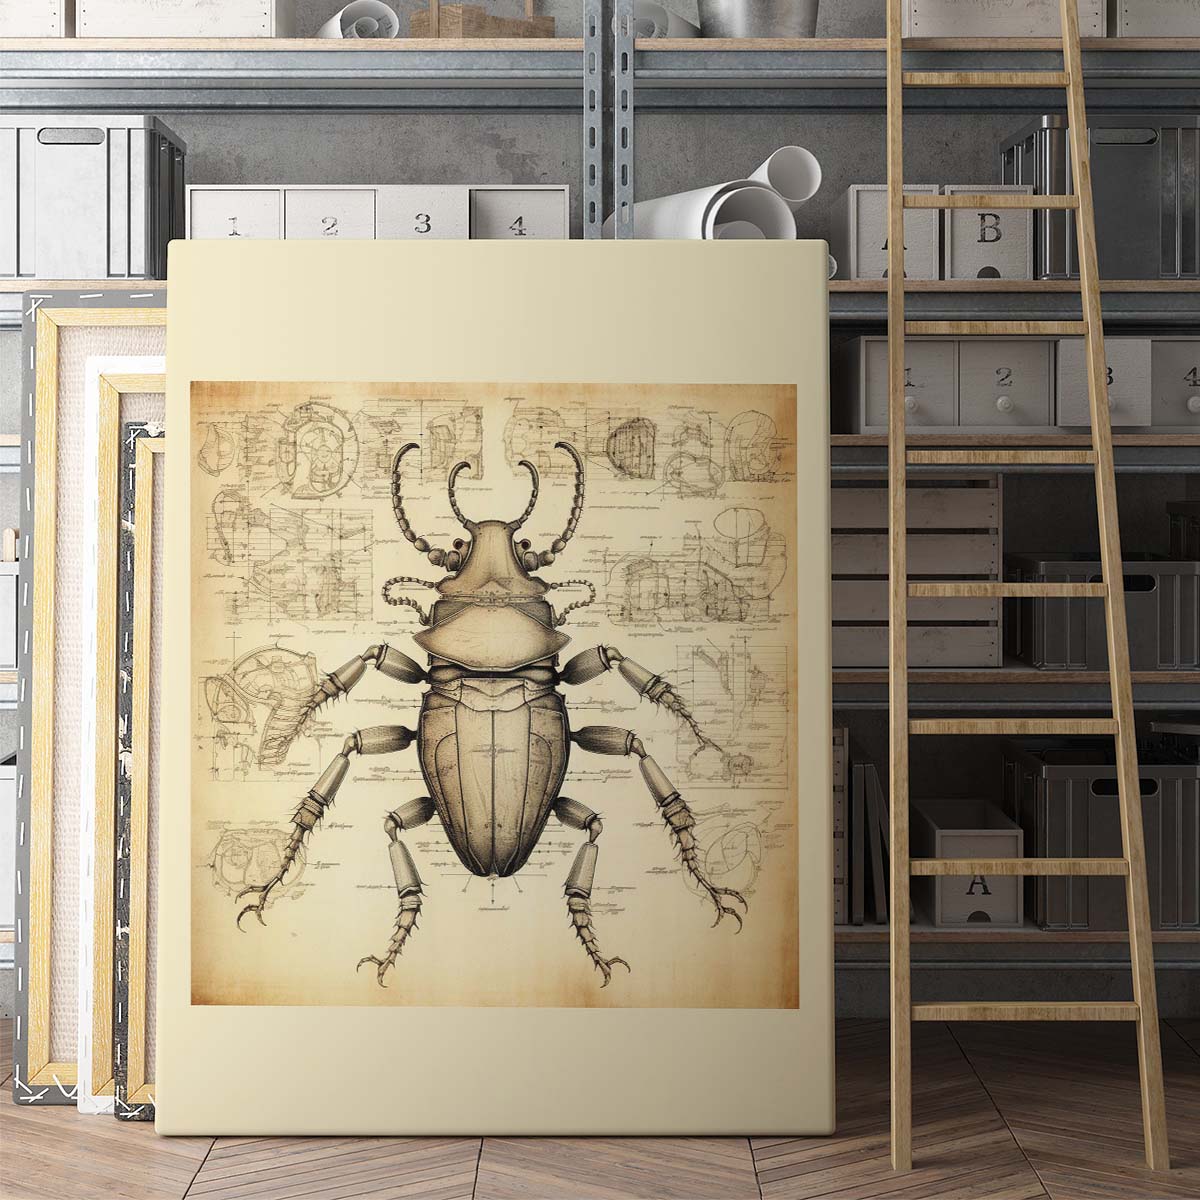 Drawings Beetle Da Vinci Style Vintage Framed Canvas Prints Wall Art Hanging Home Decor